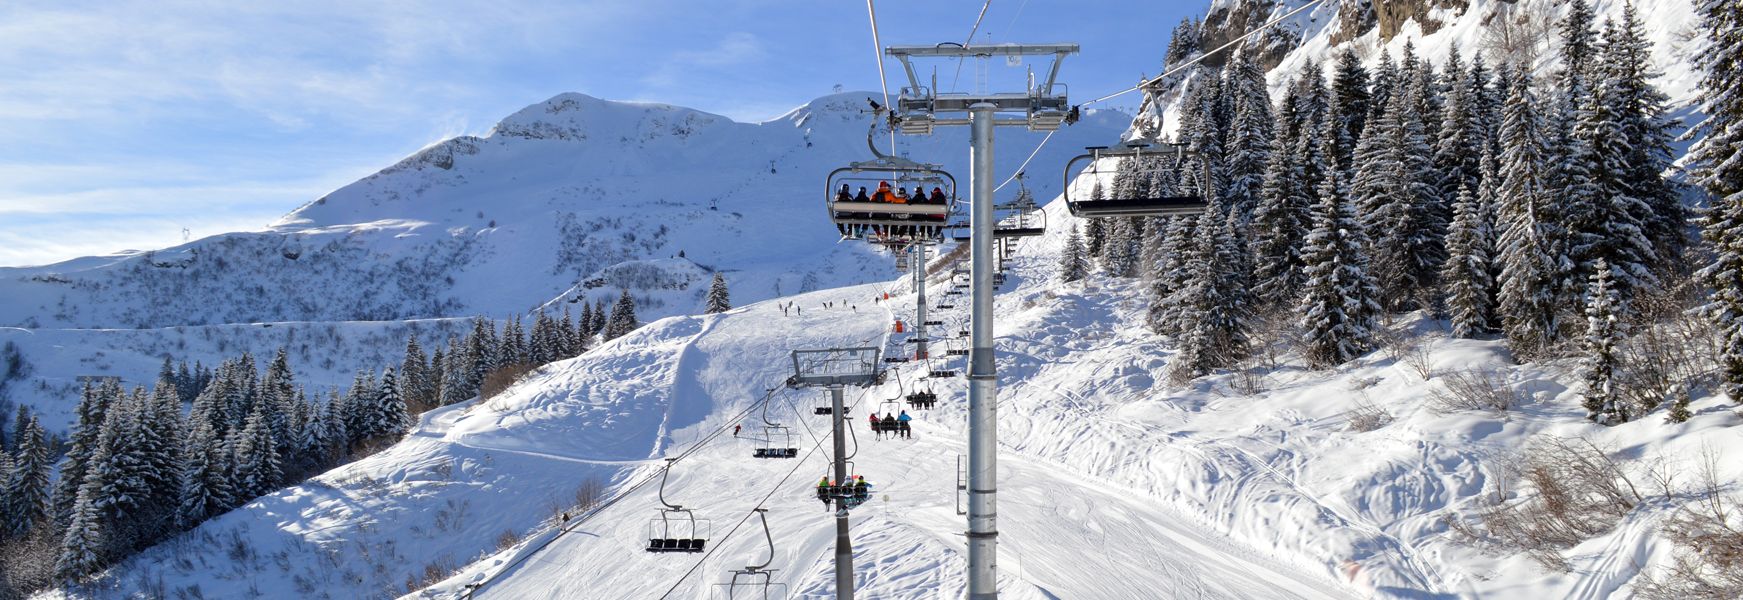 Location Ski Intersport Samoens